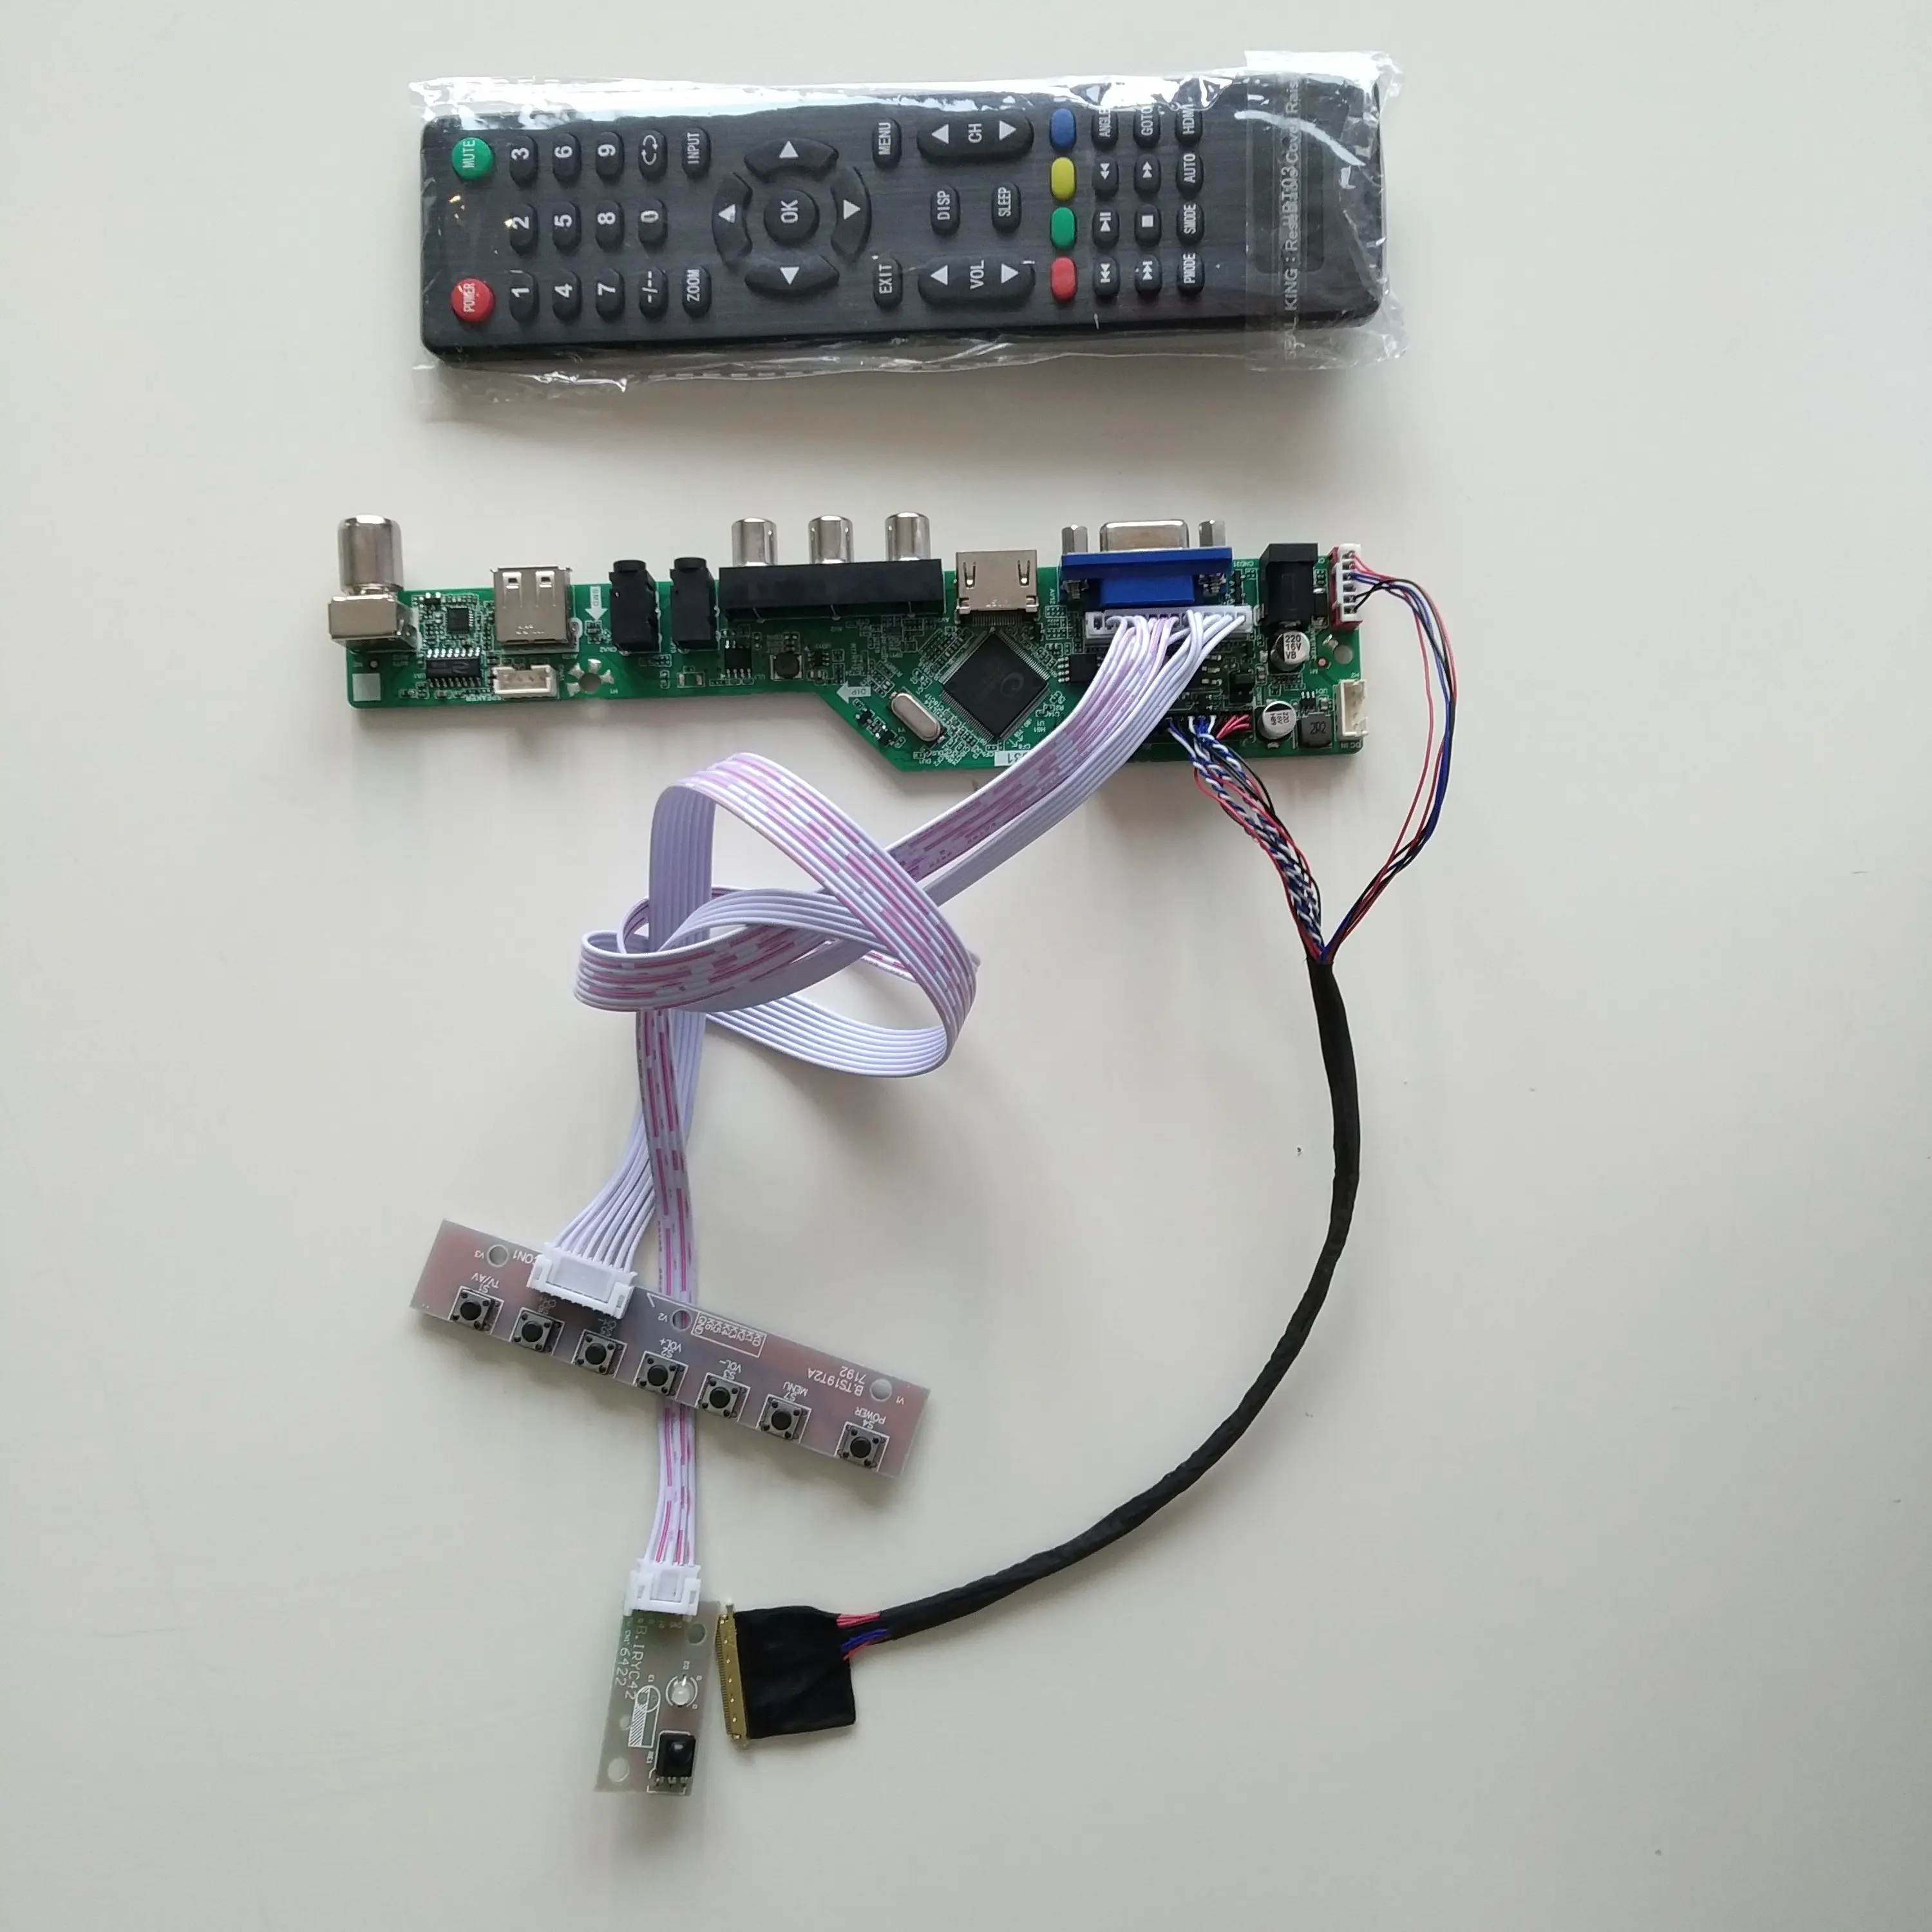 

VGA AV LCD LED TV USB AUDIO Controller driver Board display kit For LTN101NT02 1024X600 monitor cable